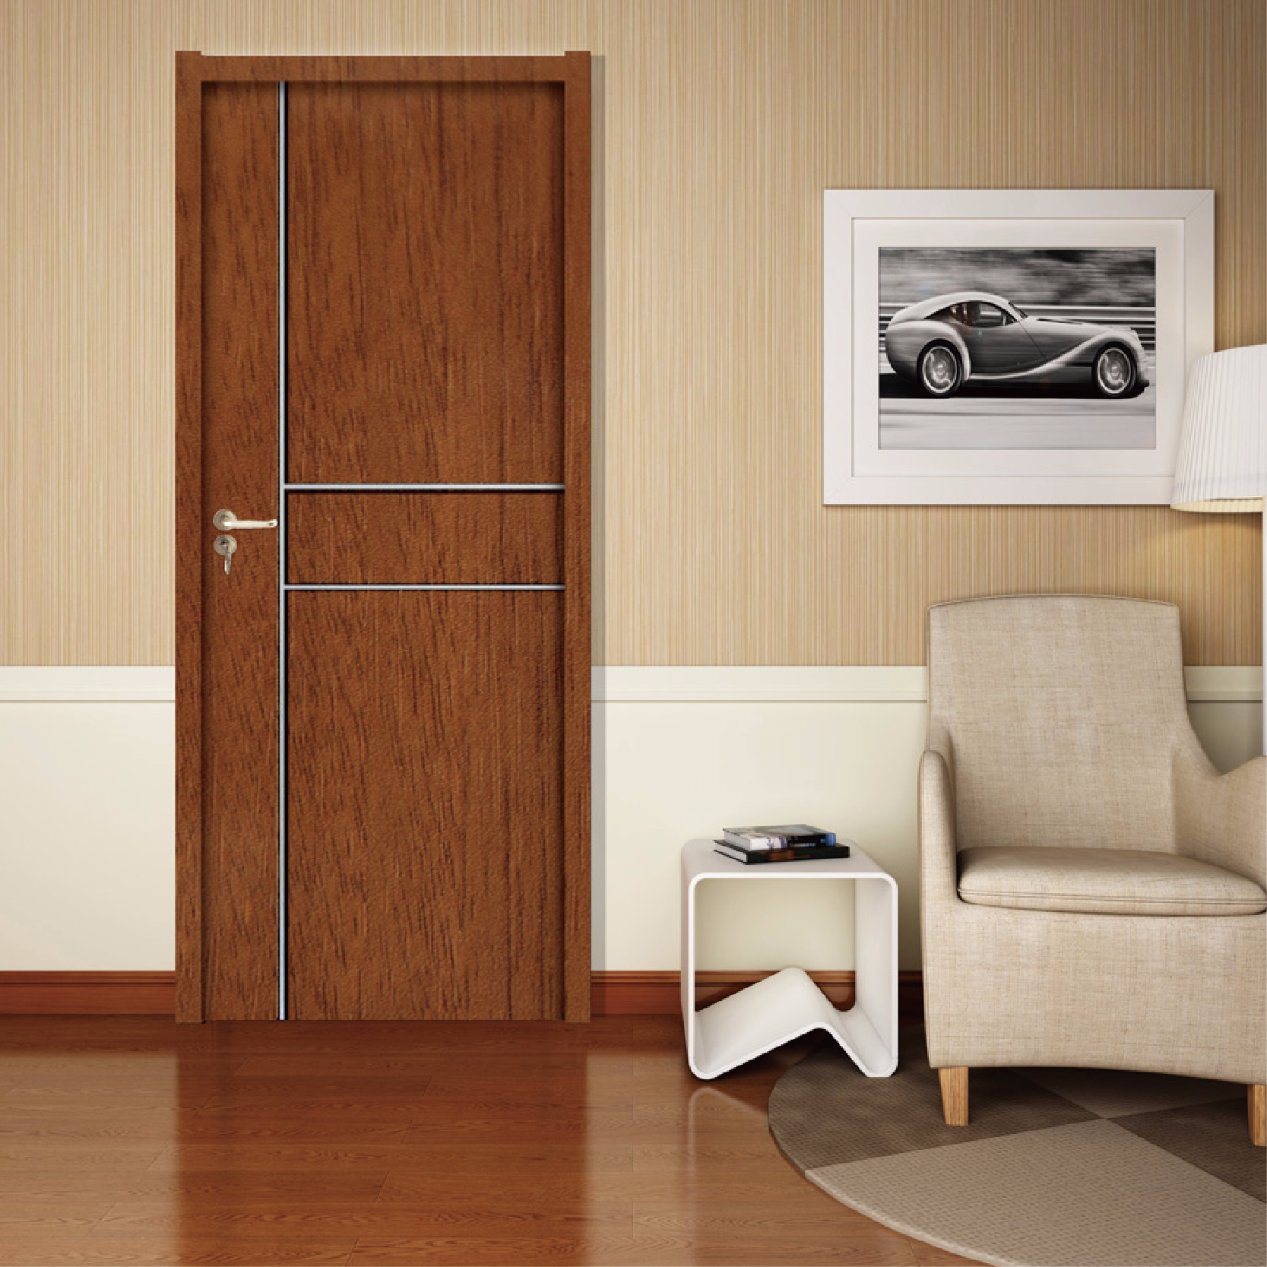 OEM/ODM WPC Material PVC Laminated Door for Bathroom Bedroom (KM-11)